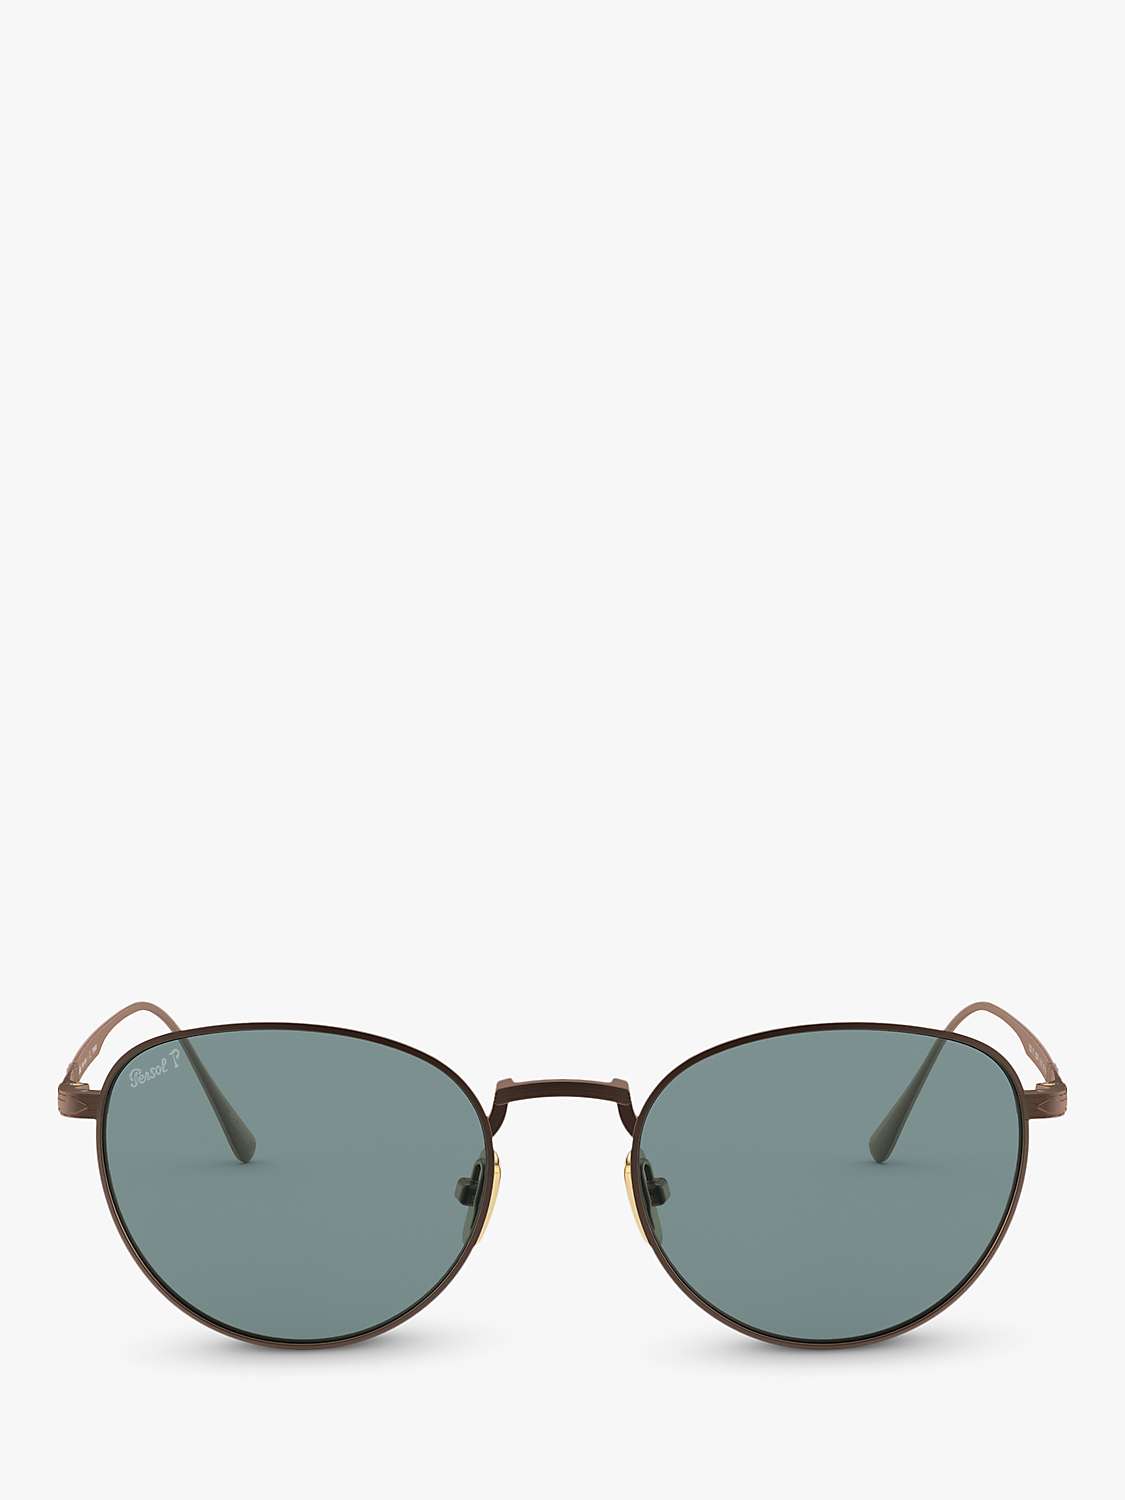 Buy Persol PO5002ST Men's Oval Sunglasses Online at johnlewis.com